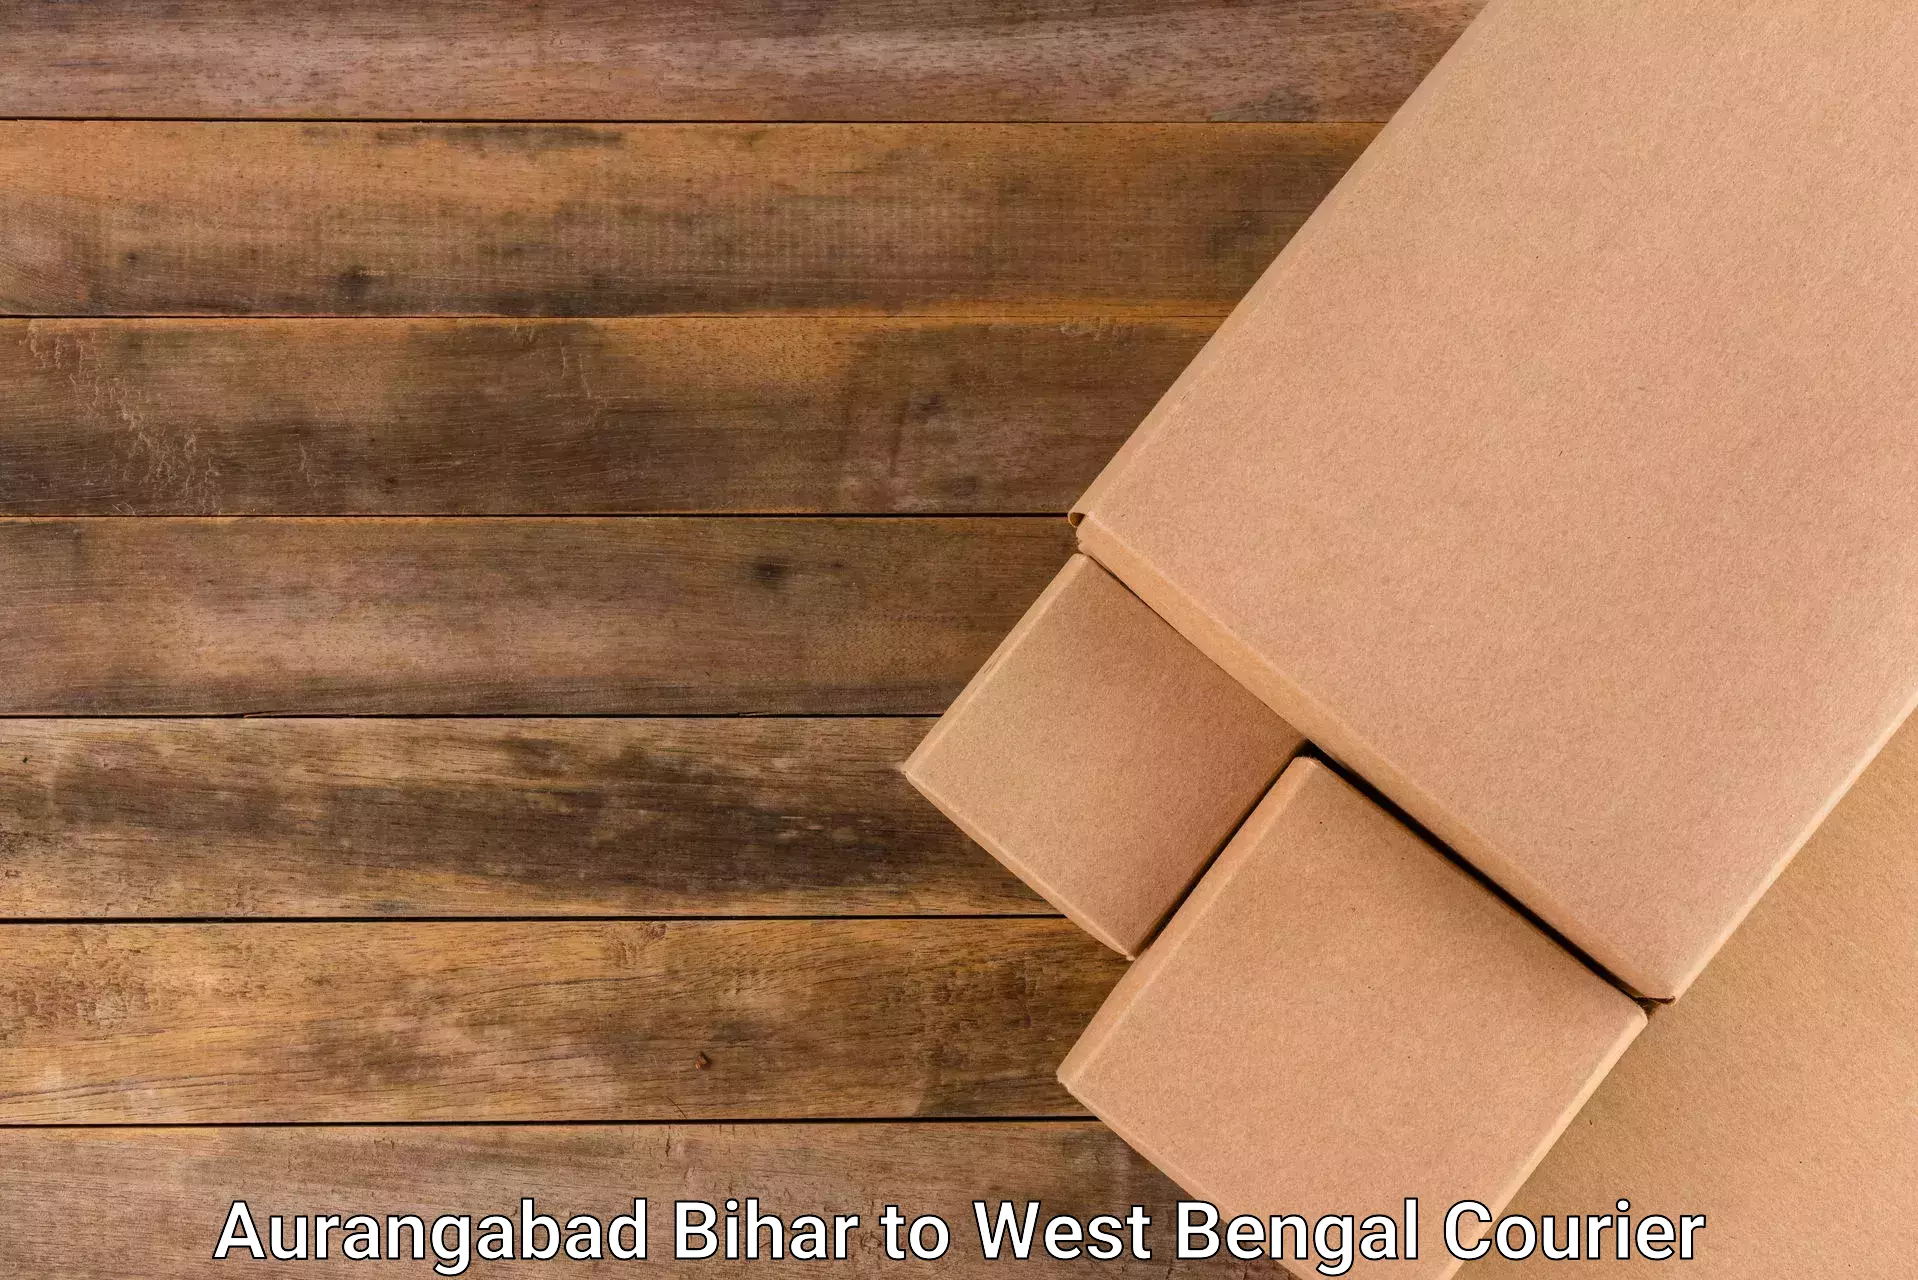 Global shipping solutions Aurangabad Bihar to Barrackpore